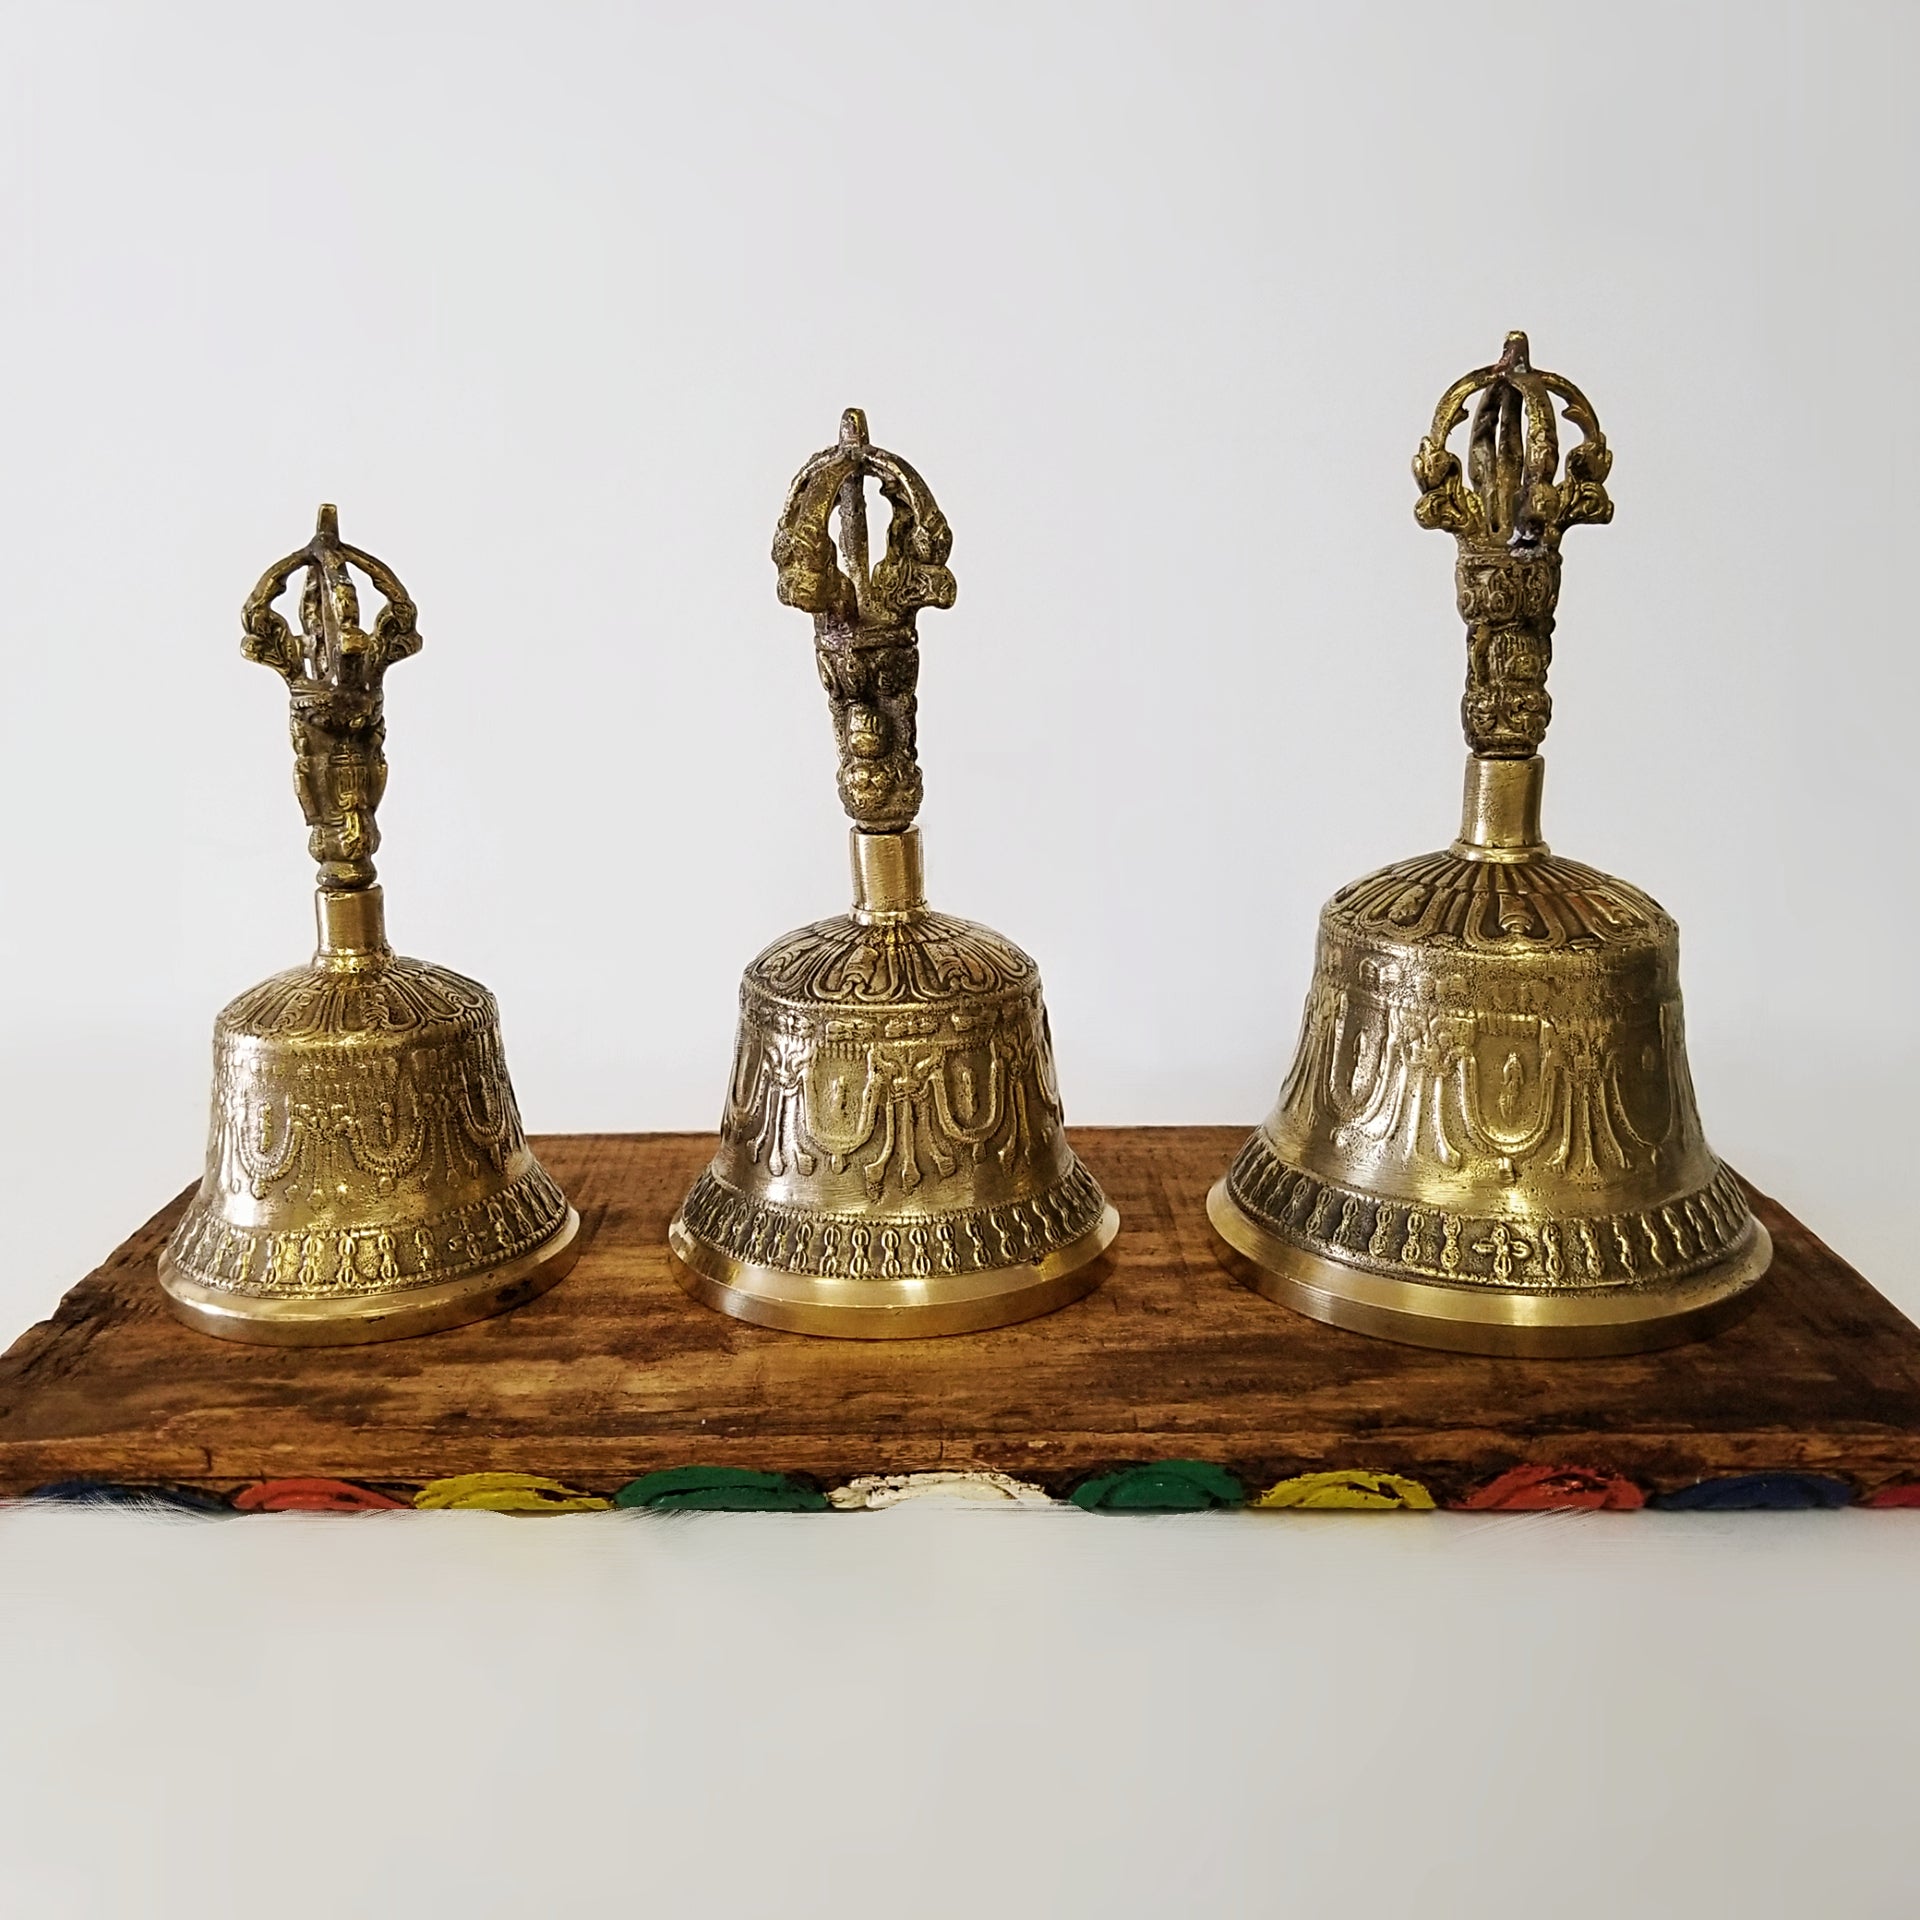 Meditation Tools | Home Decoration | Brass Tibetan Bell Carved